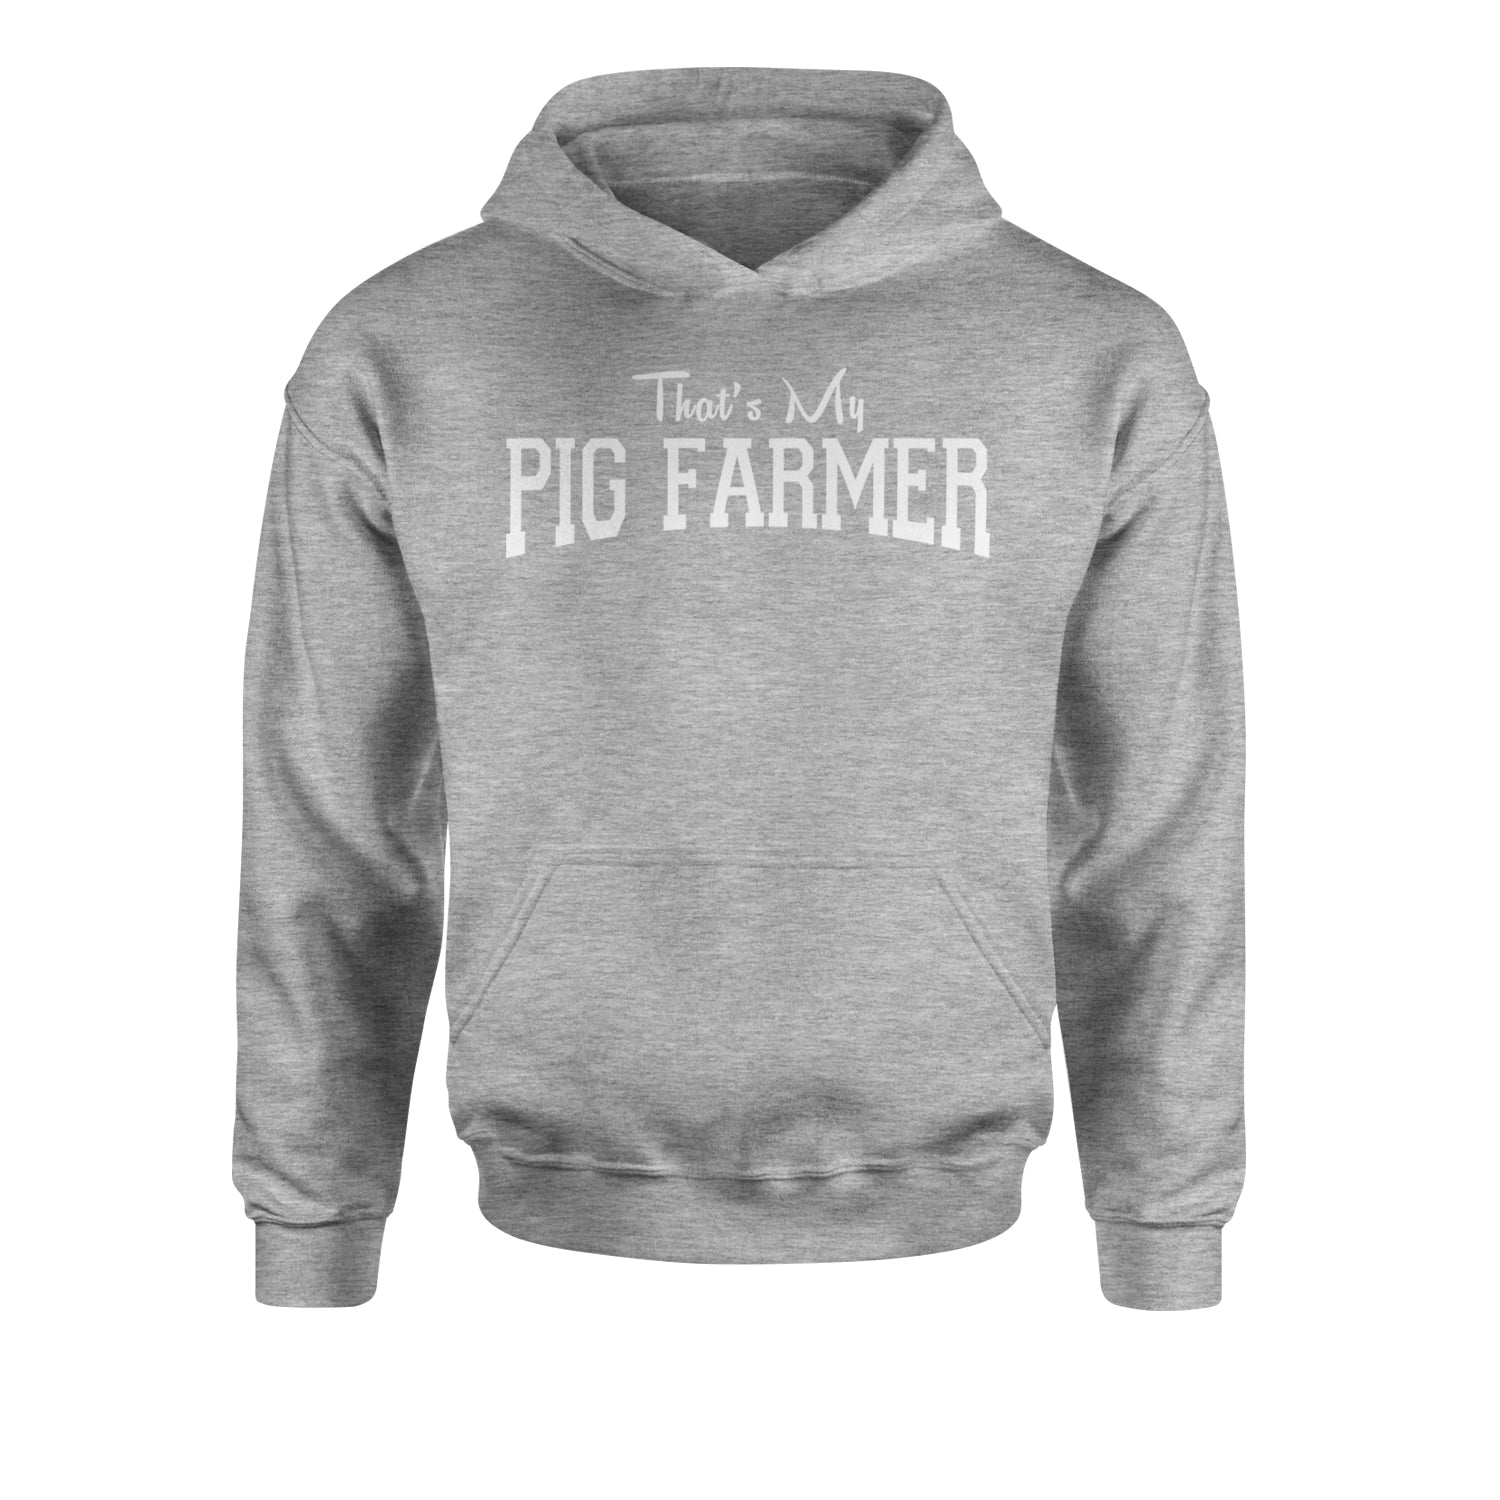 That's My Pig Farmer Utah Football Youth-Sized Hoodie